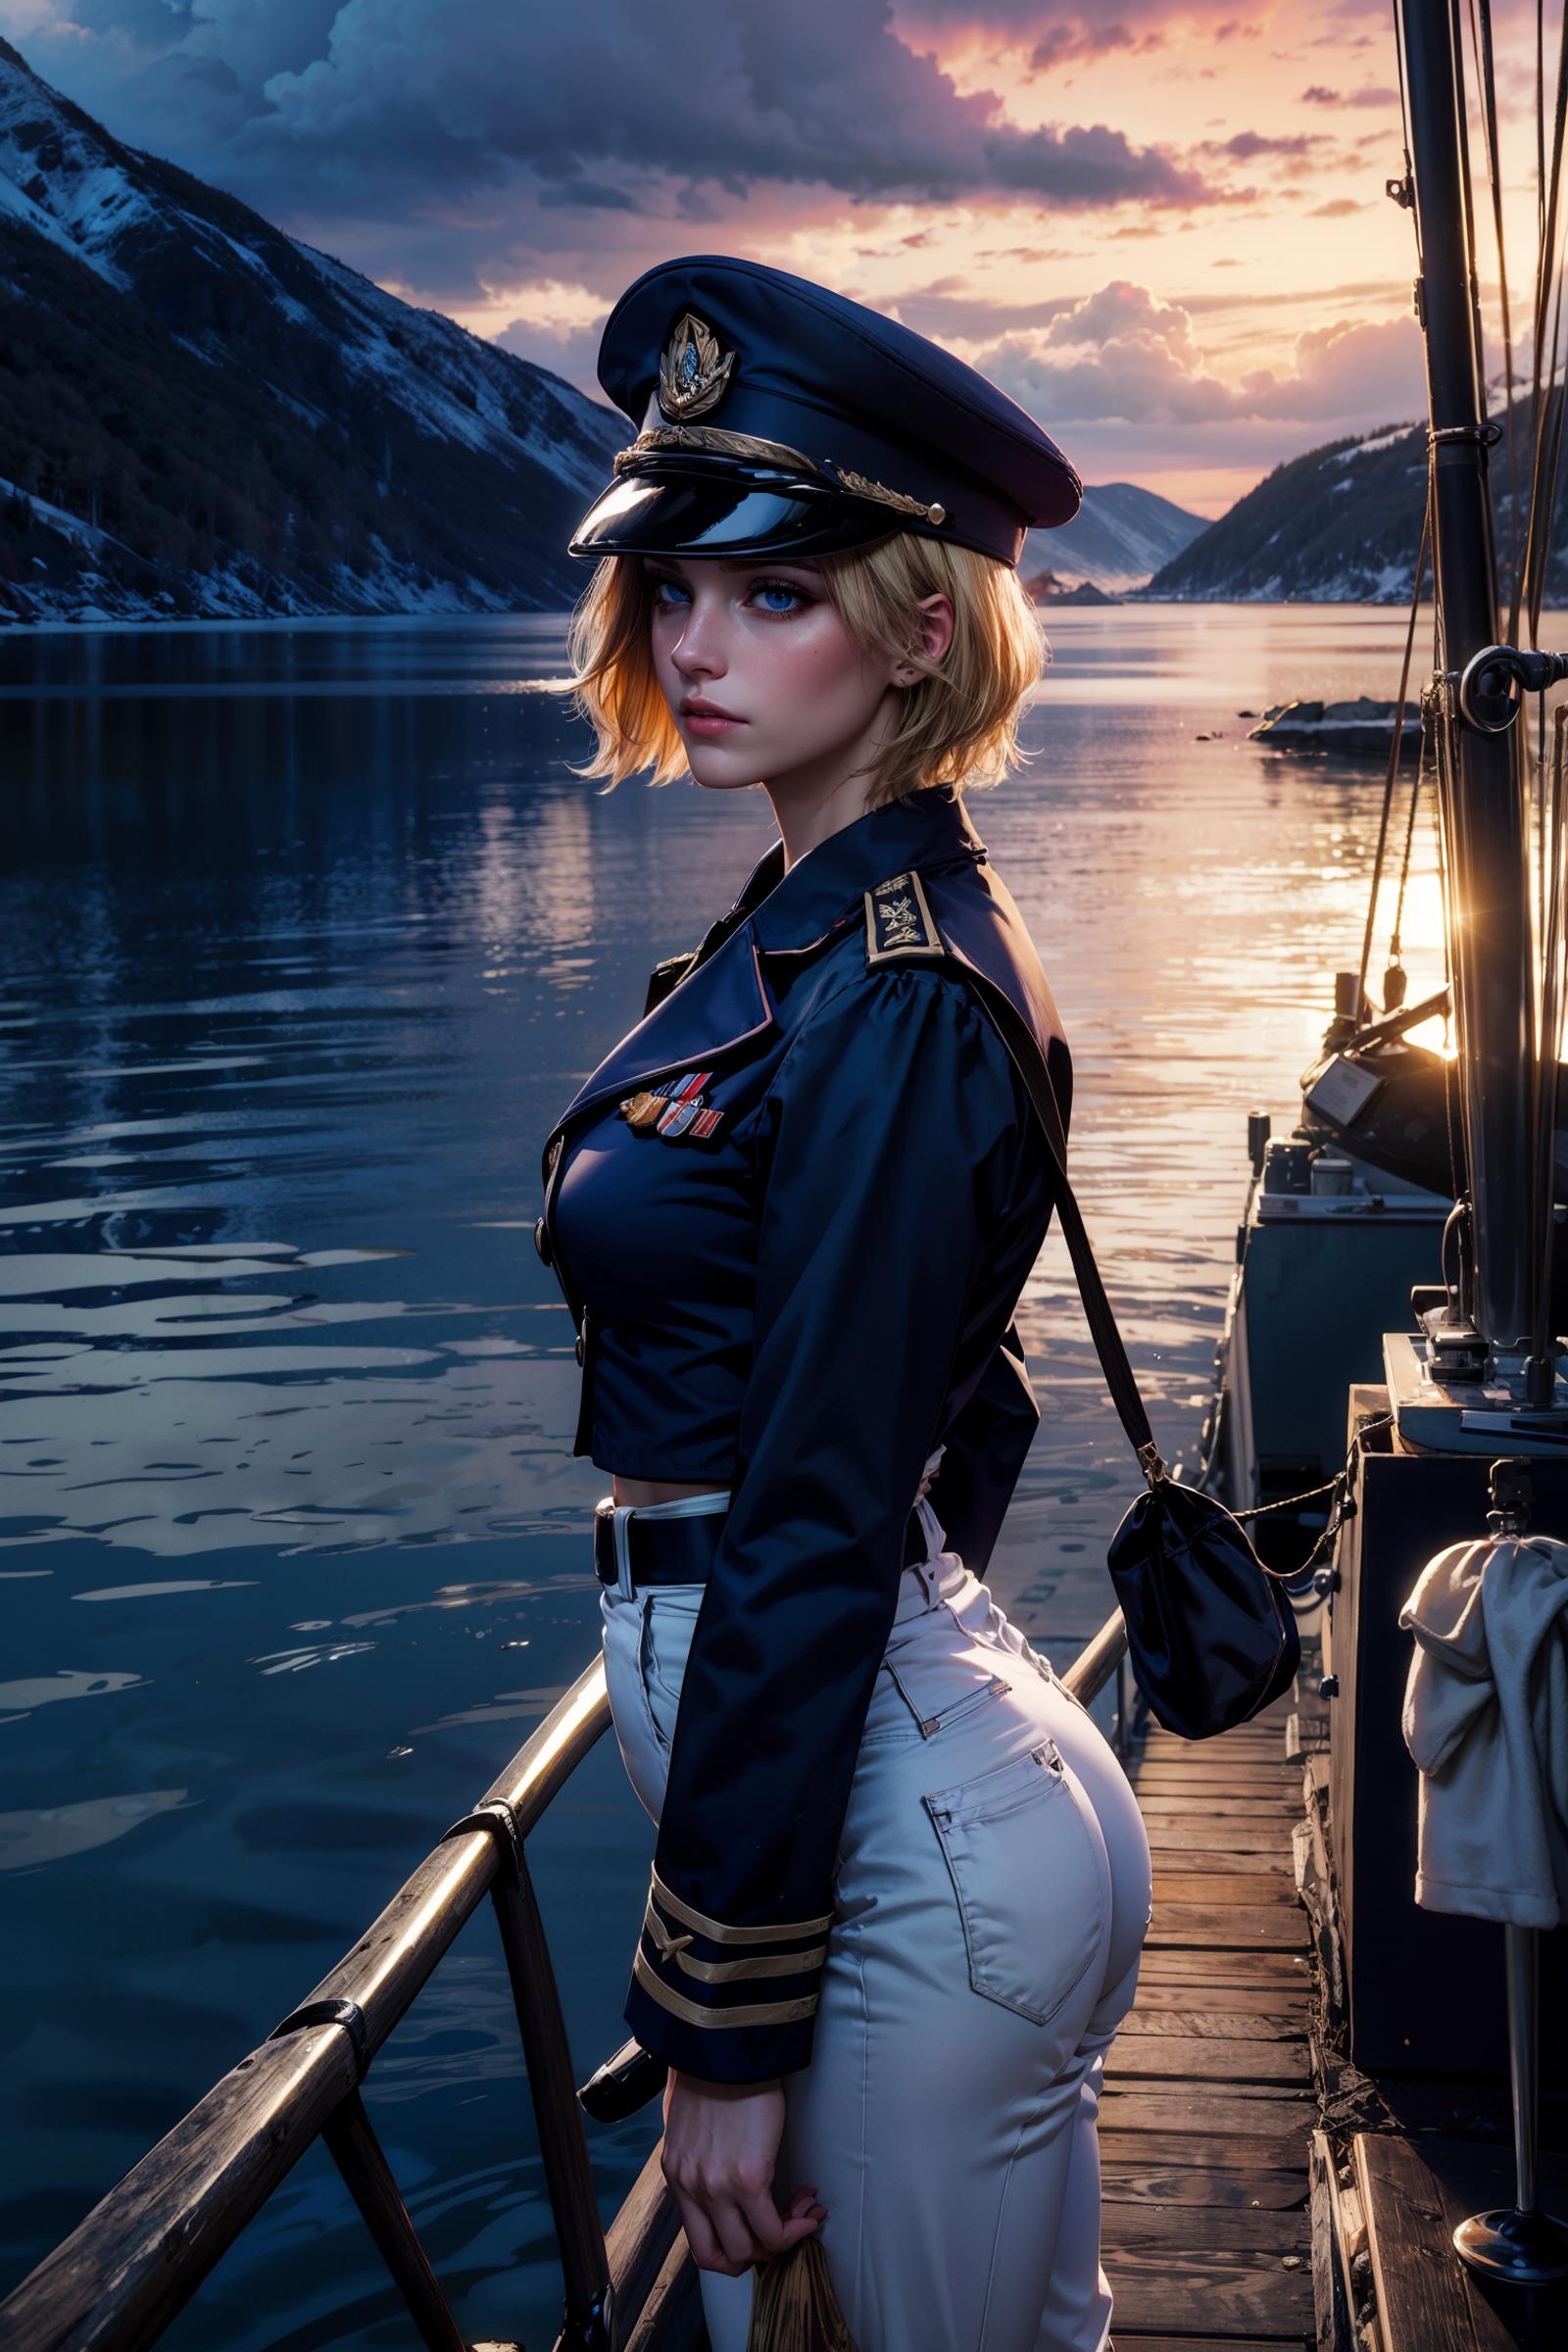 Woman in Navy Uniform Posing on Boat by Lake